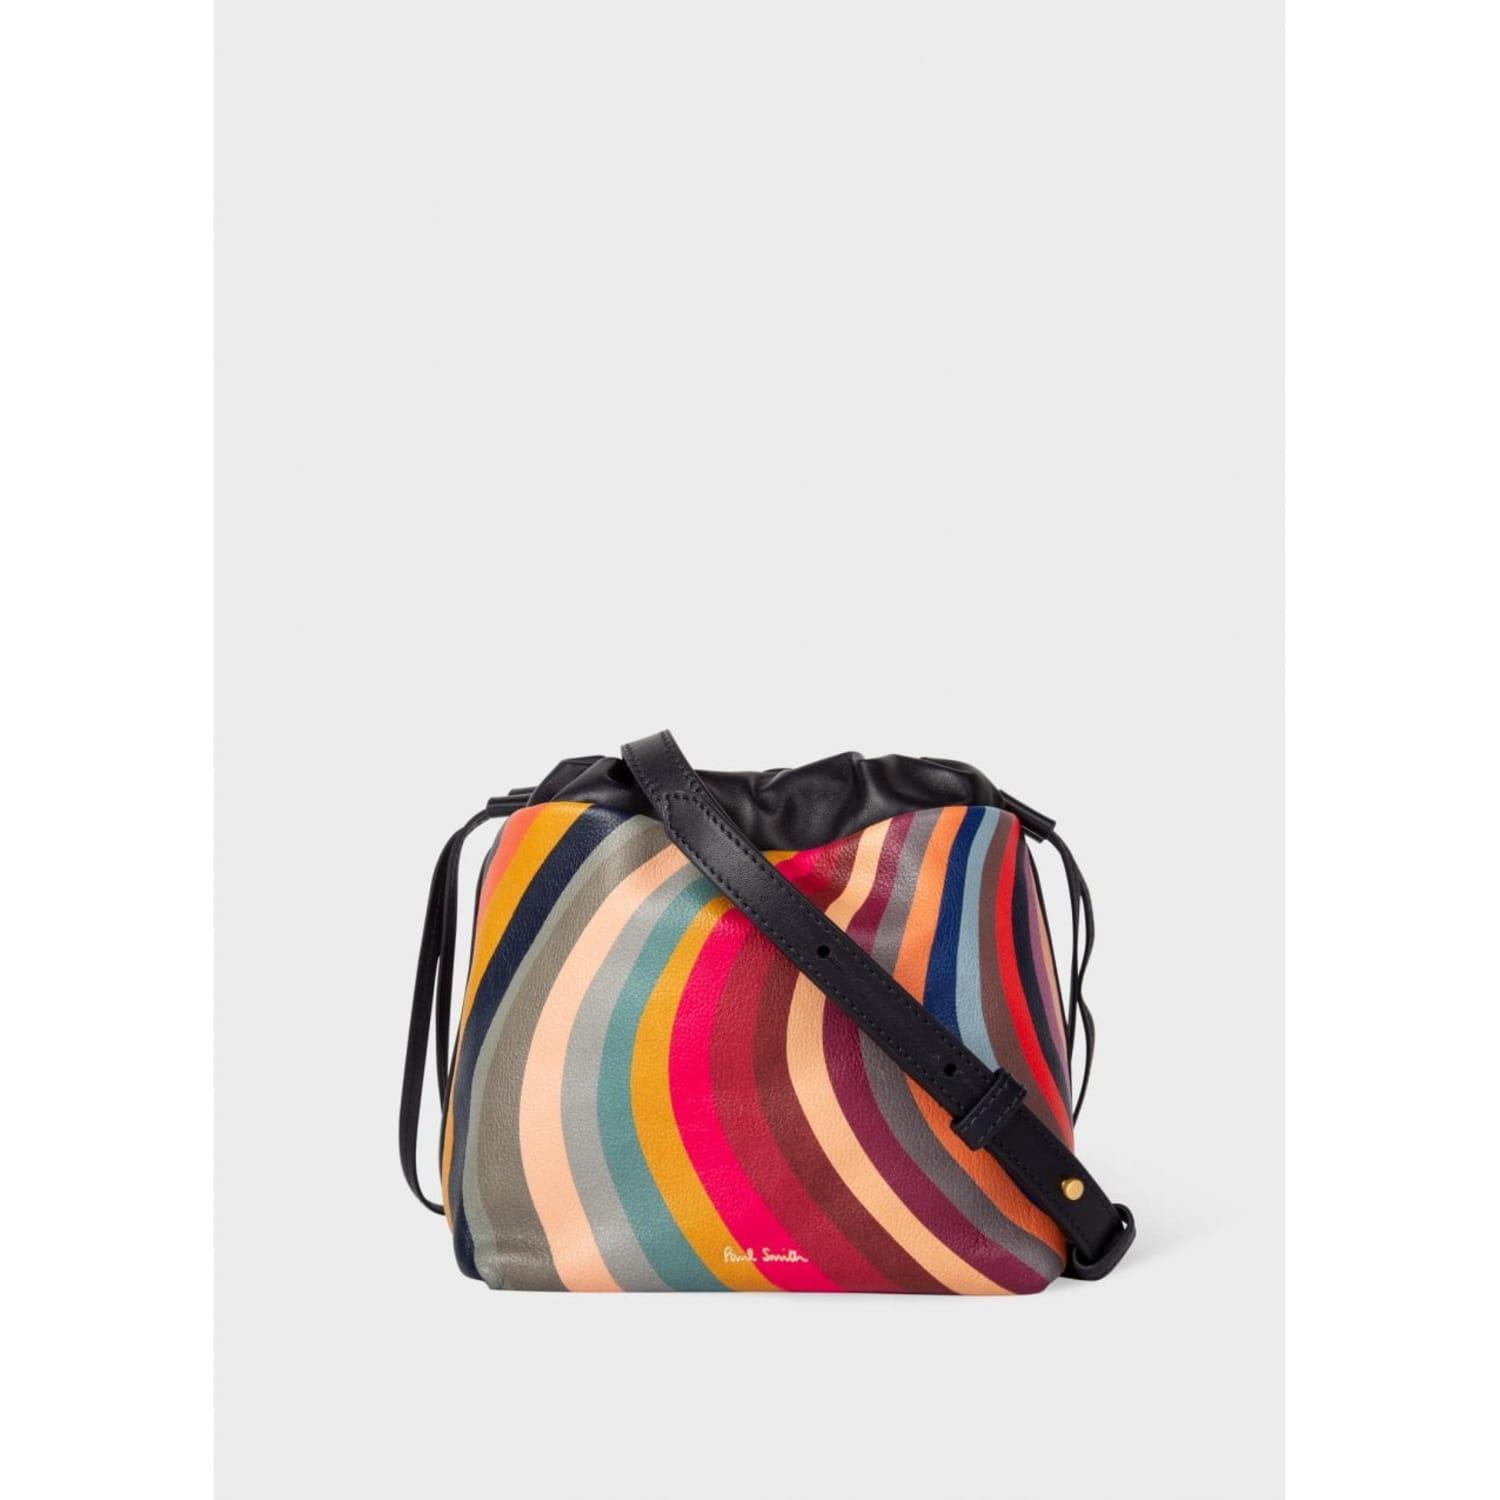 Paul Smith Women's Swirl Medium Shoulder Bag